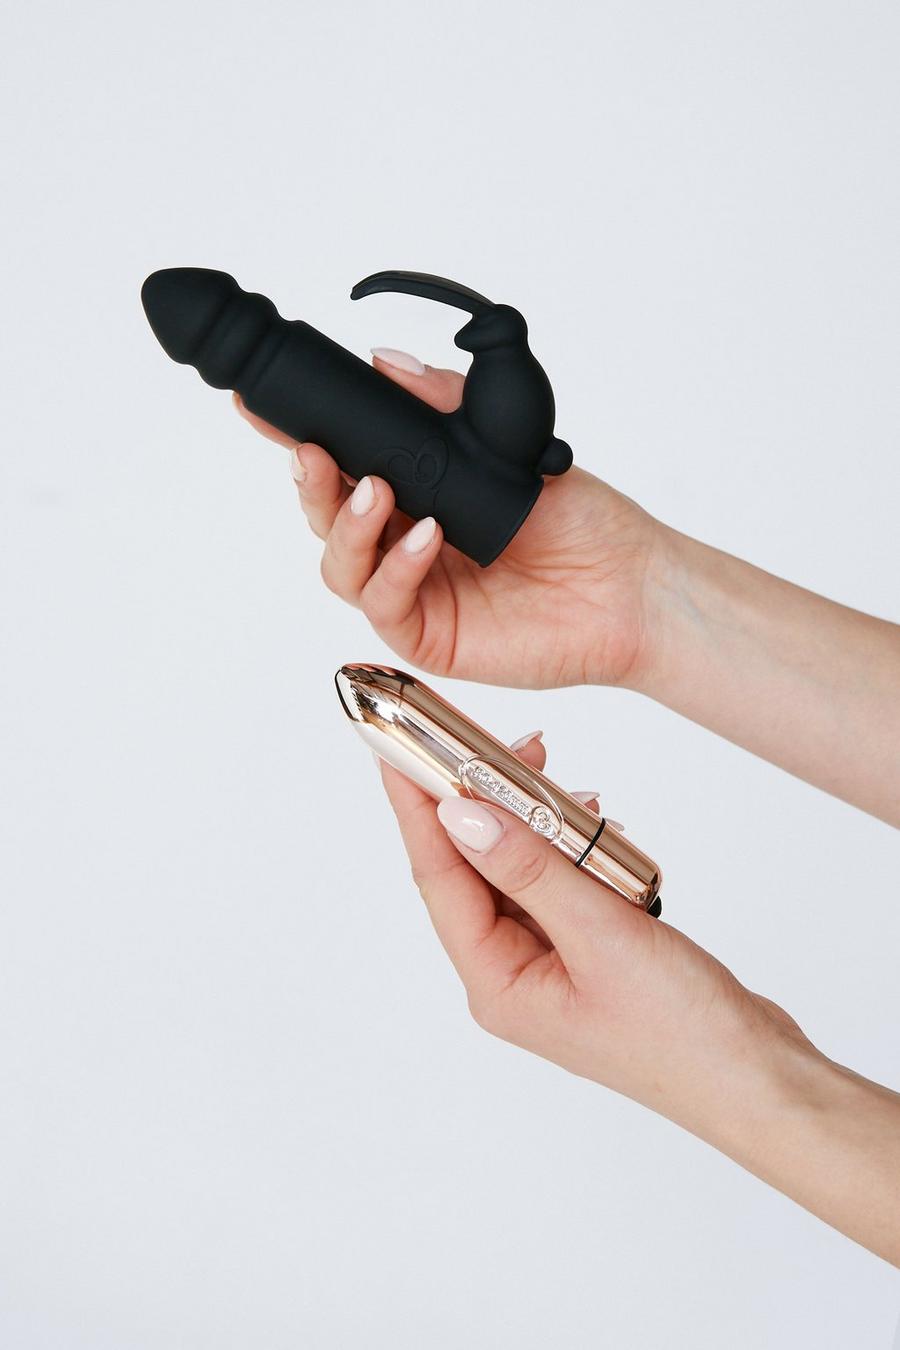 Dual Use Rabbit Vibrator Sex Toy